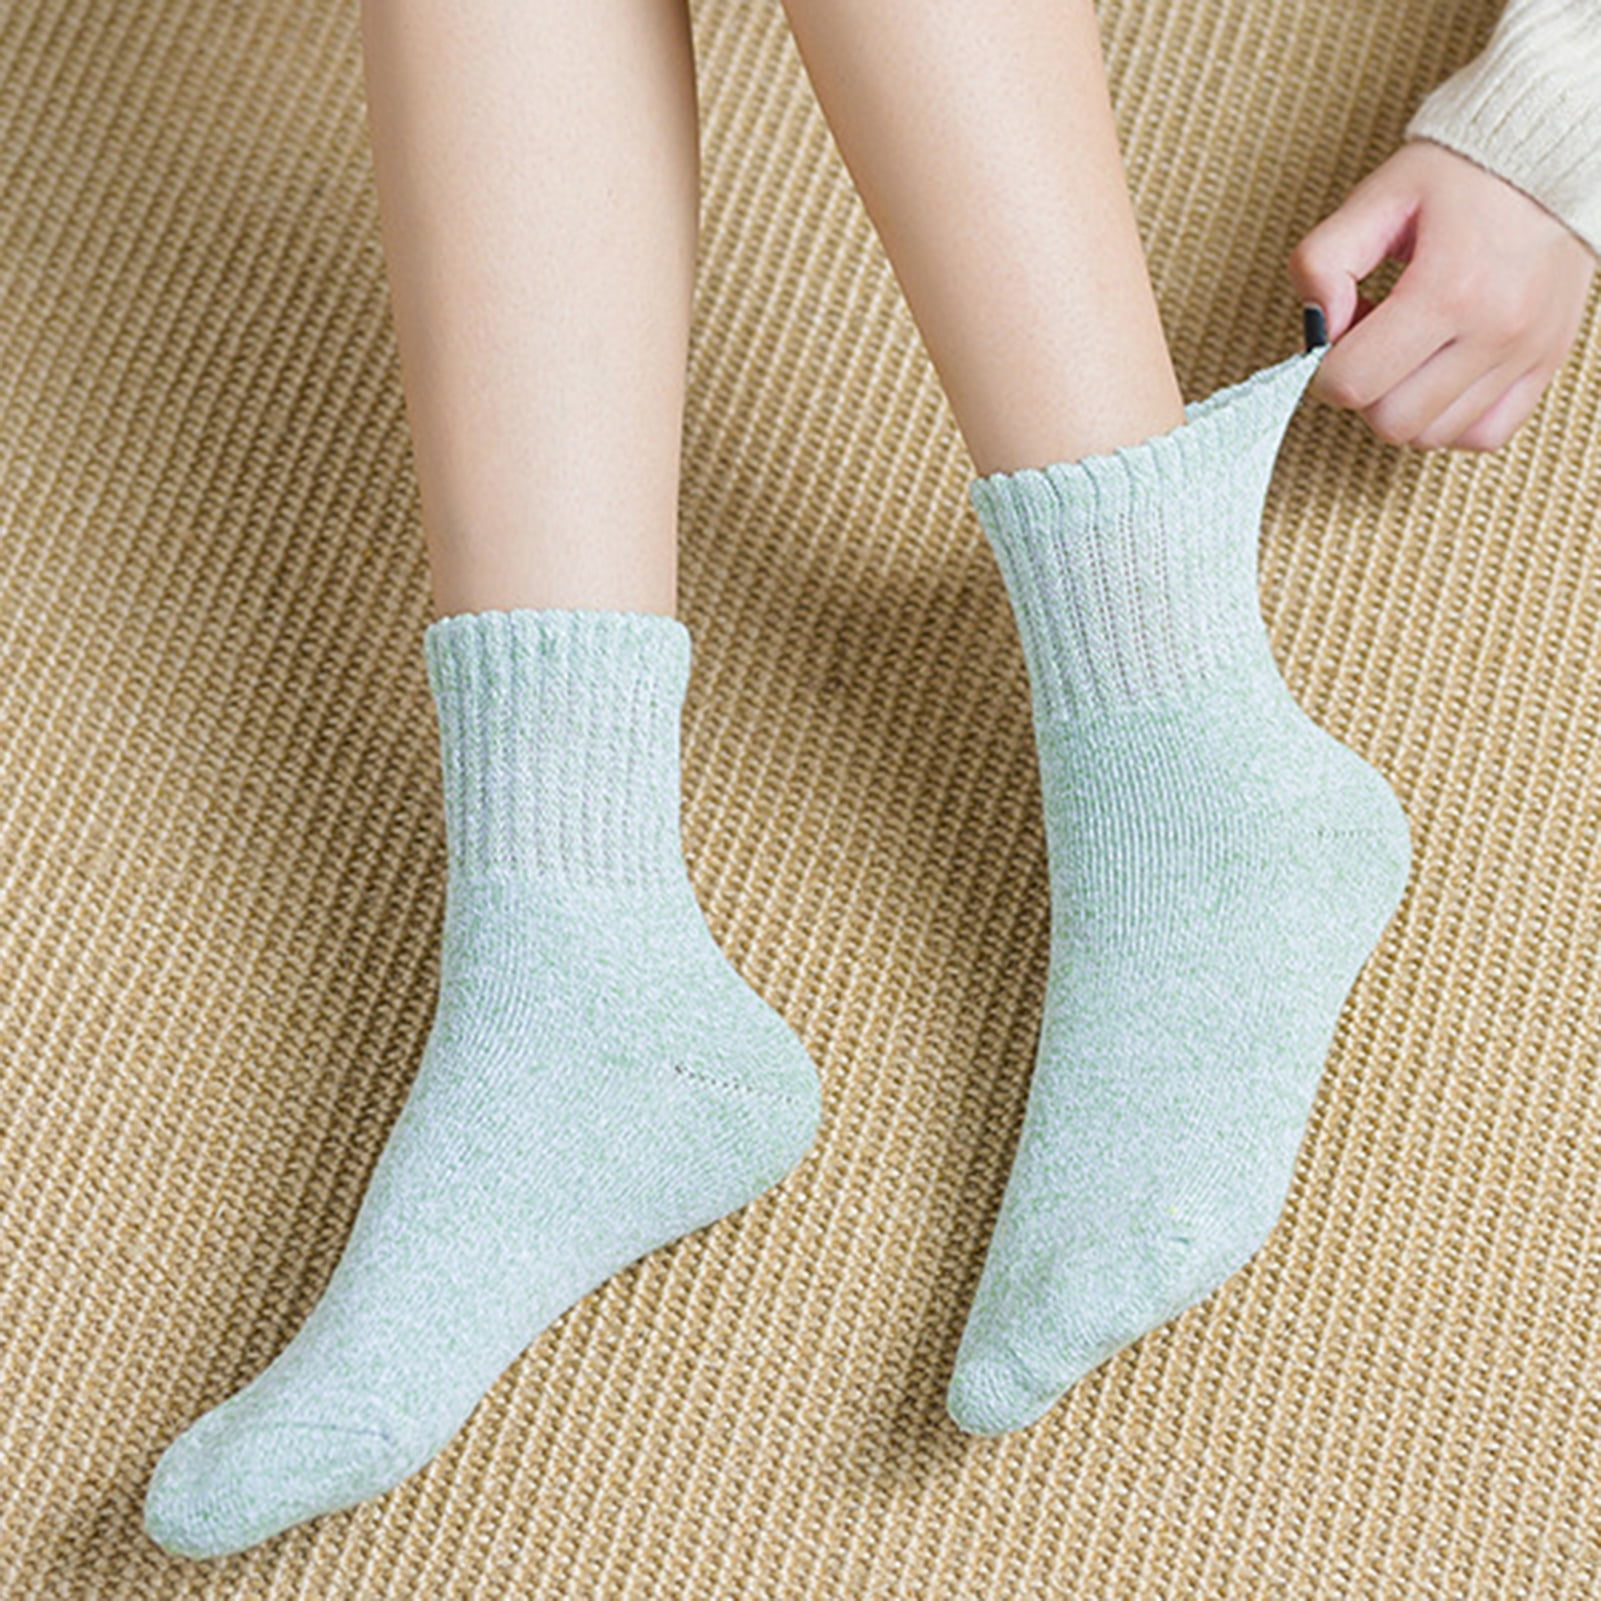 Unisex Warm Winter Short Cotton Hosiery Ankle Length Elastic Sports Knit Socks